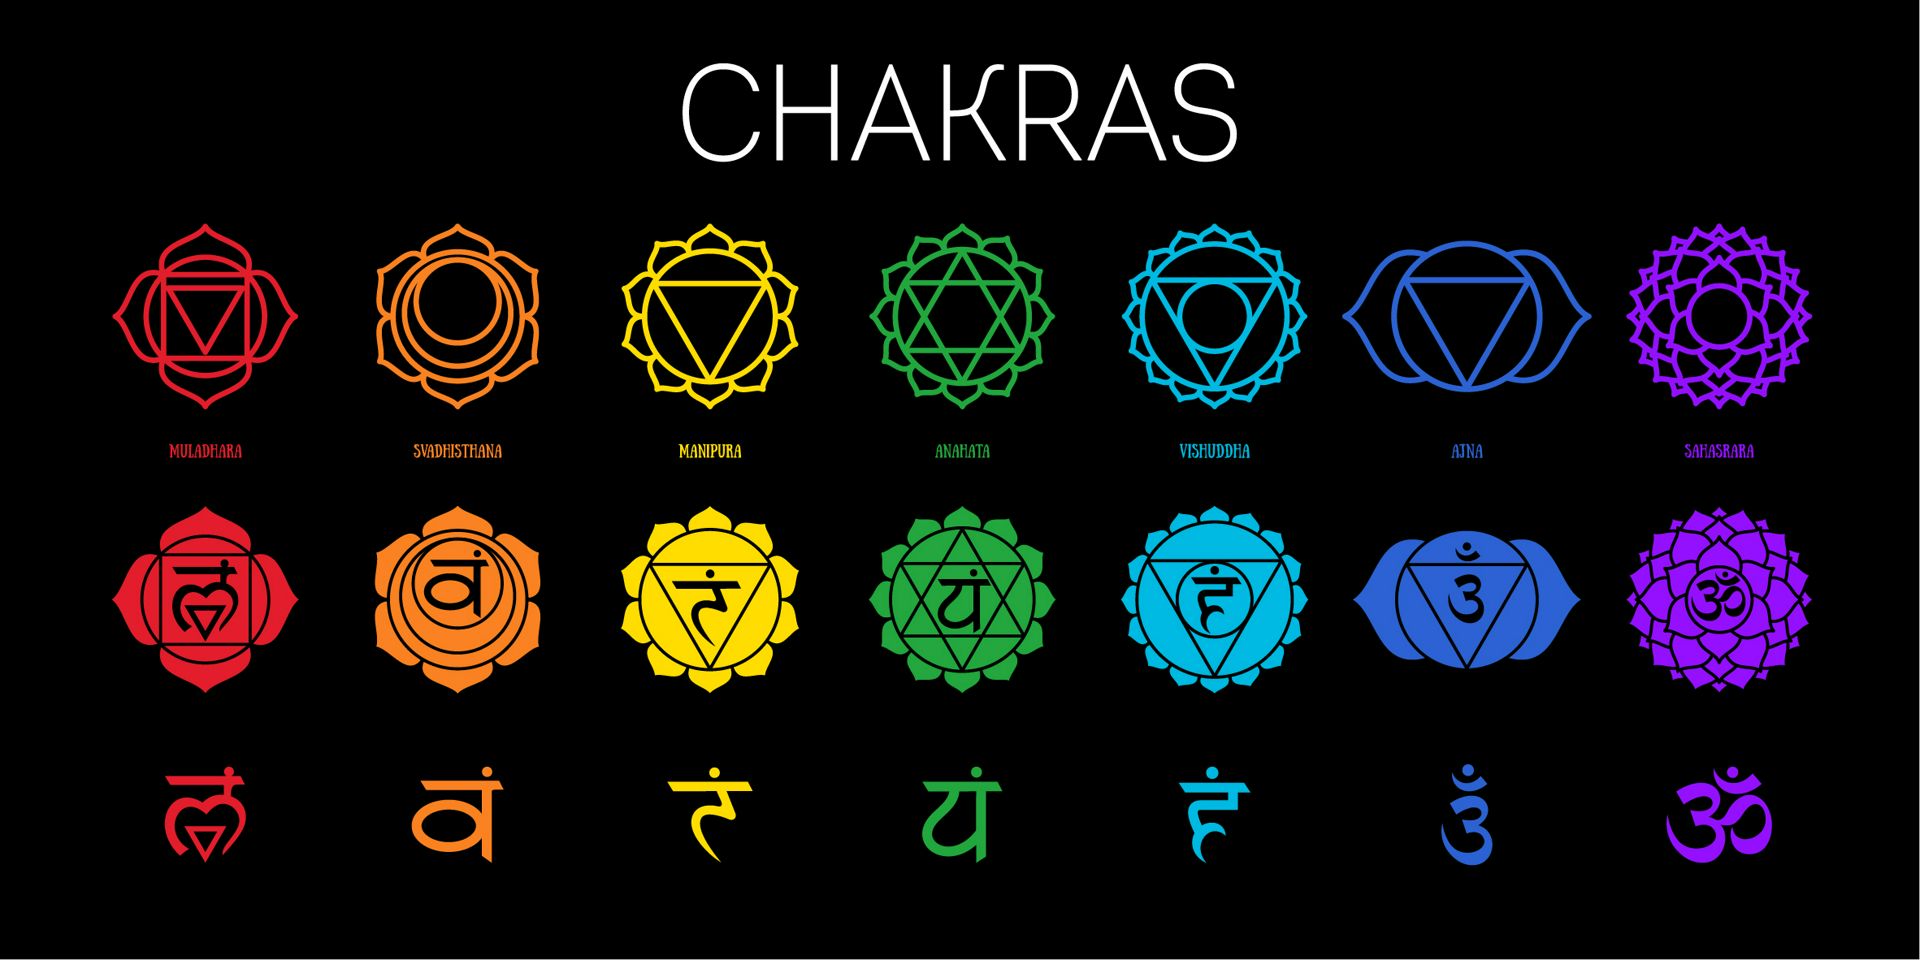 Плакат Chakras для йога клуба. Чакра или падма. Муладхара, Свадхистхана, Манипура, Анахата, Вишудха